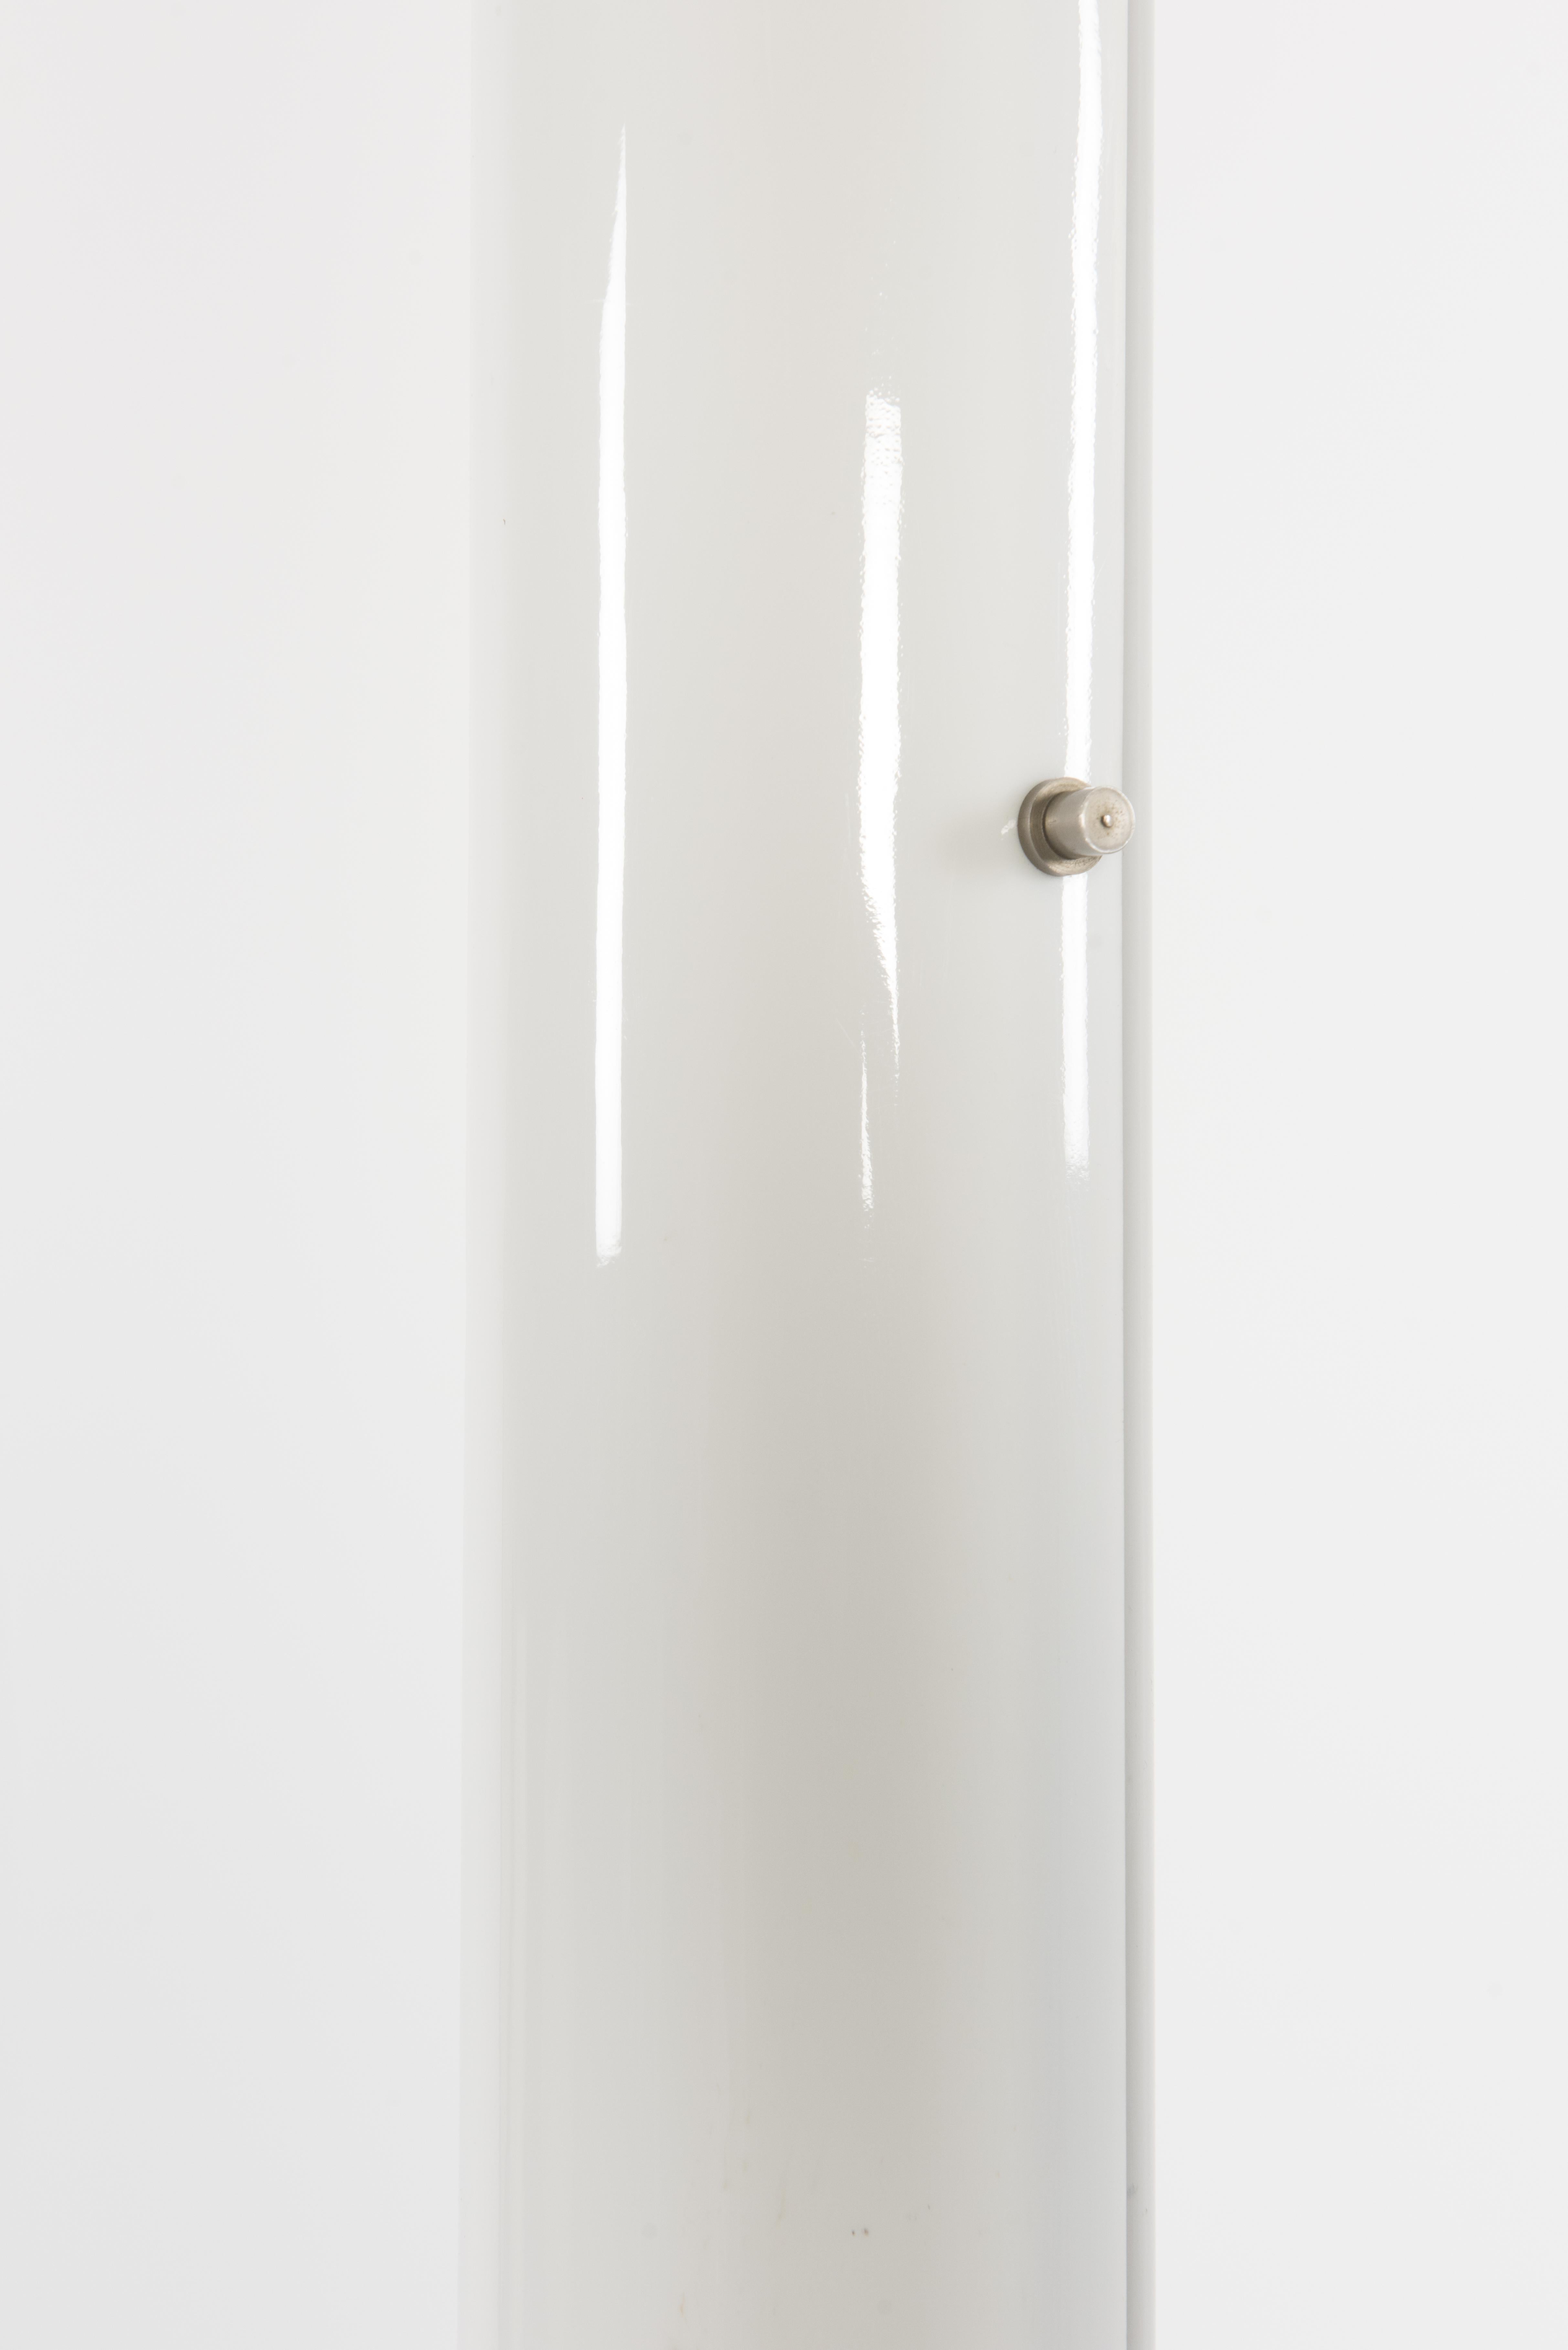 Mid-Century Modern ST84 Floor Lamp by Johan Niegemann for Artiforte For Sale